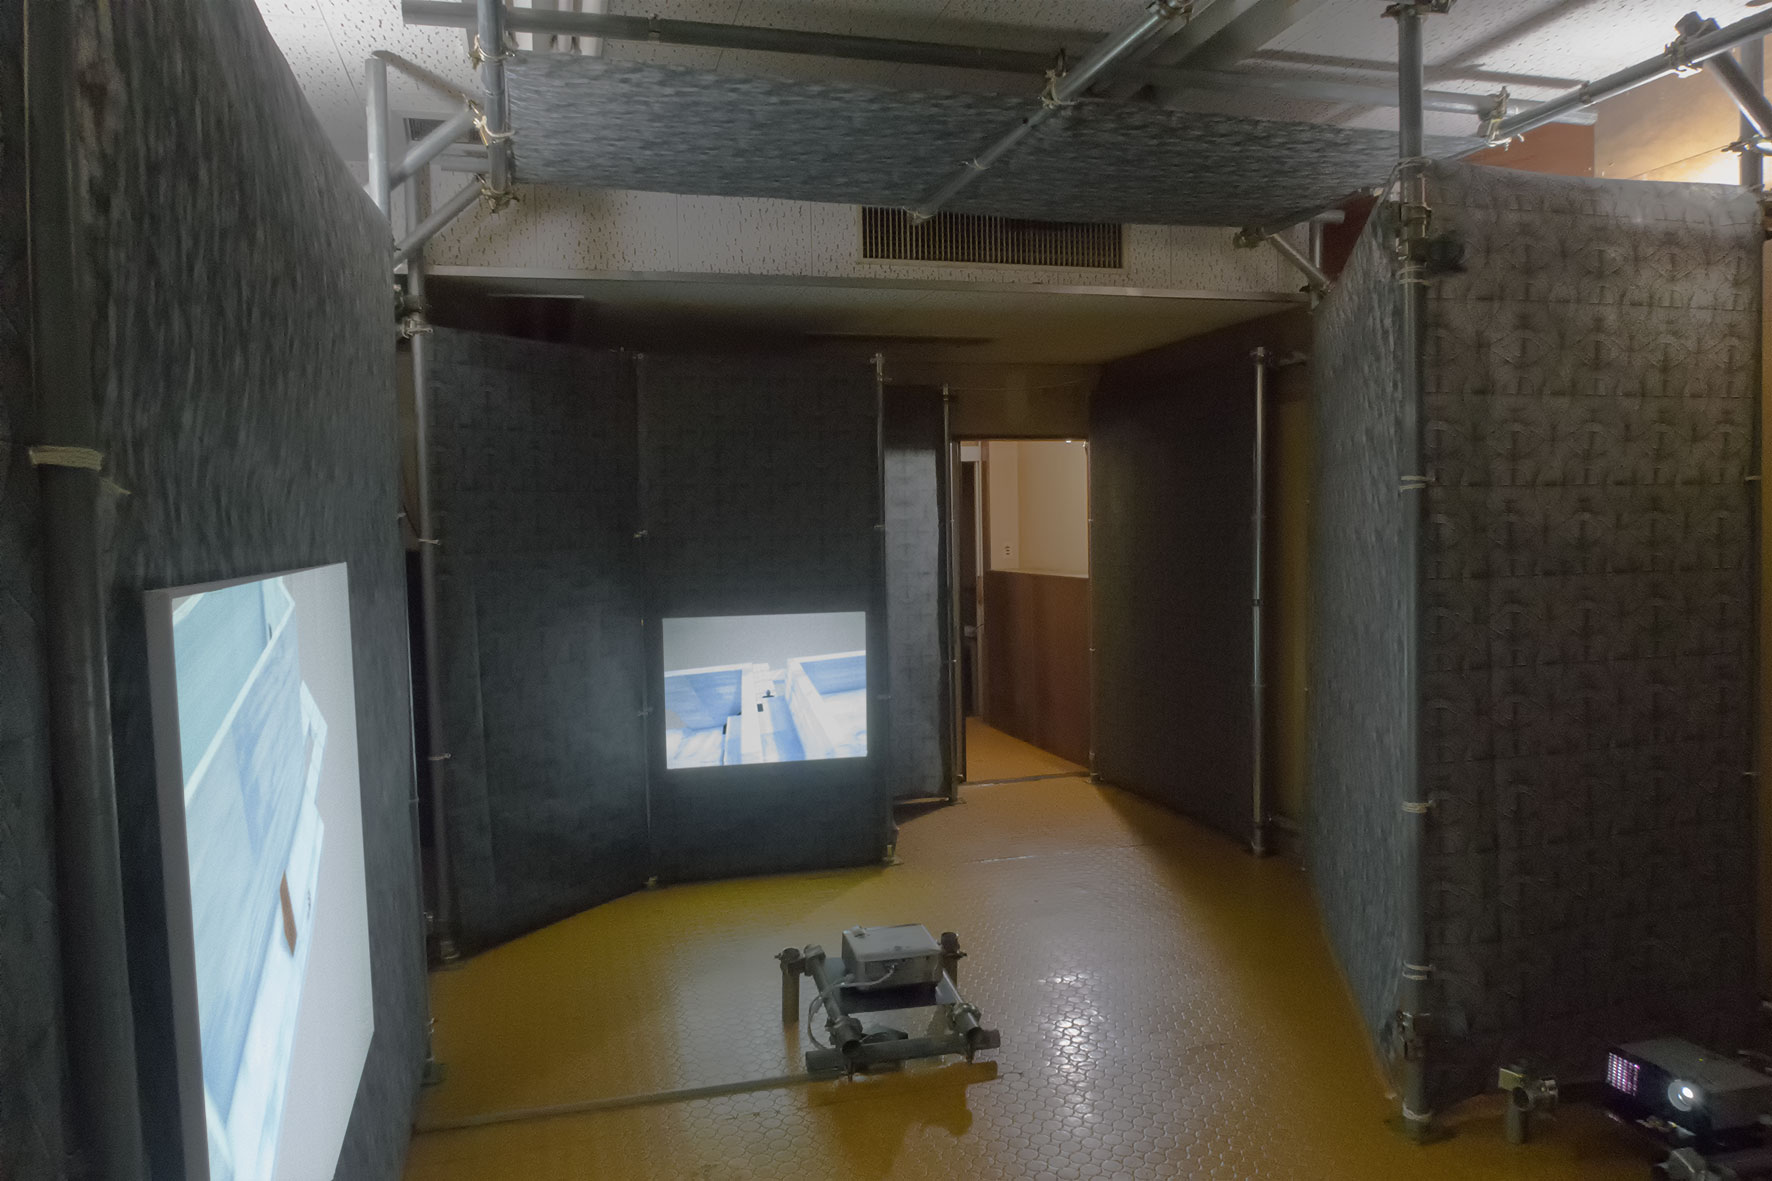 Mickael Lianza Magrathea art video game Palais des paris japon installation